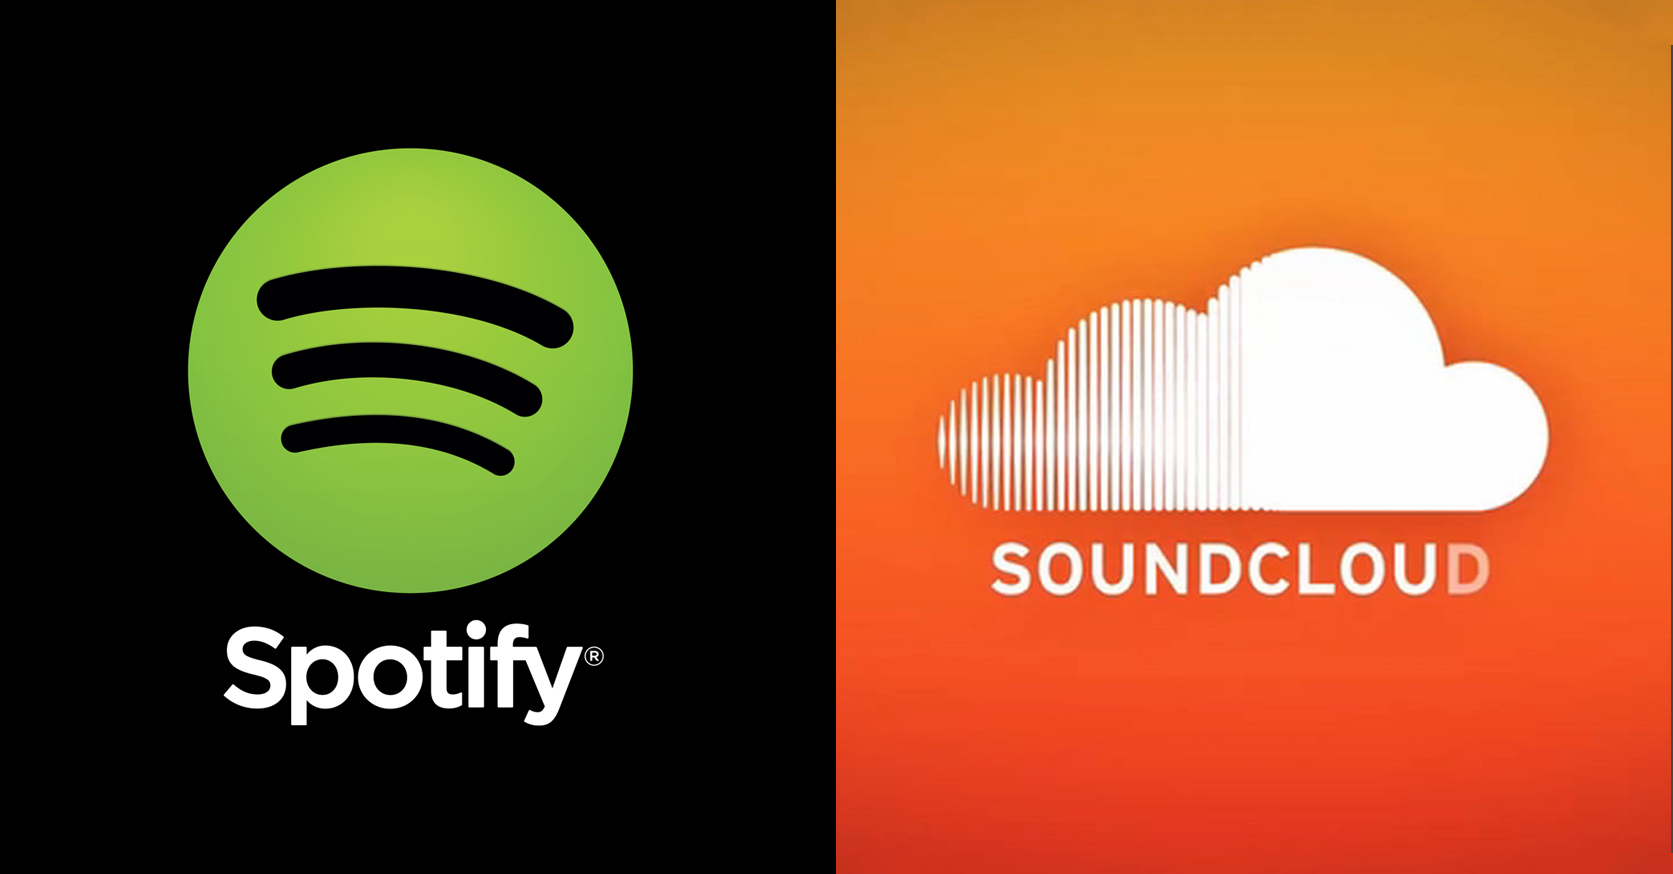 Spotify and Soundcloud logos